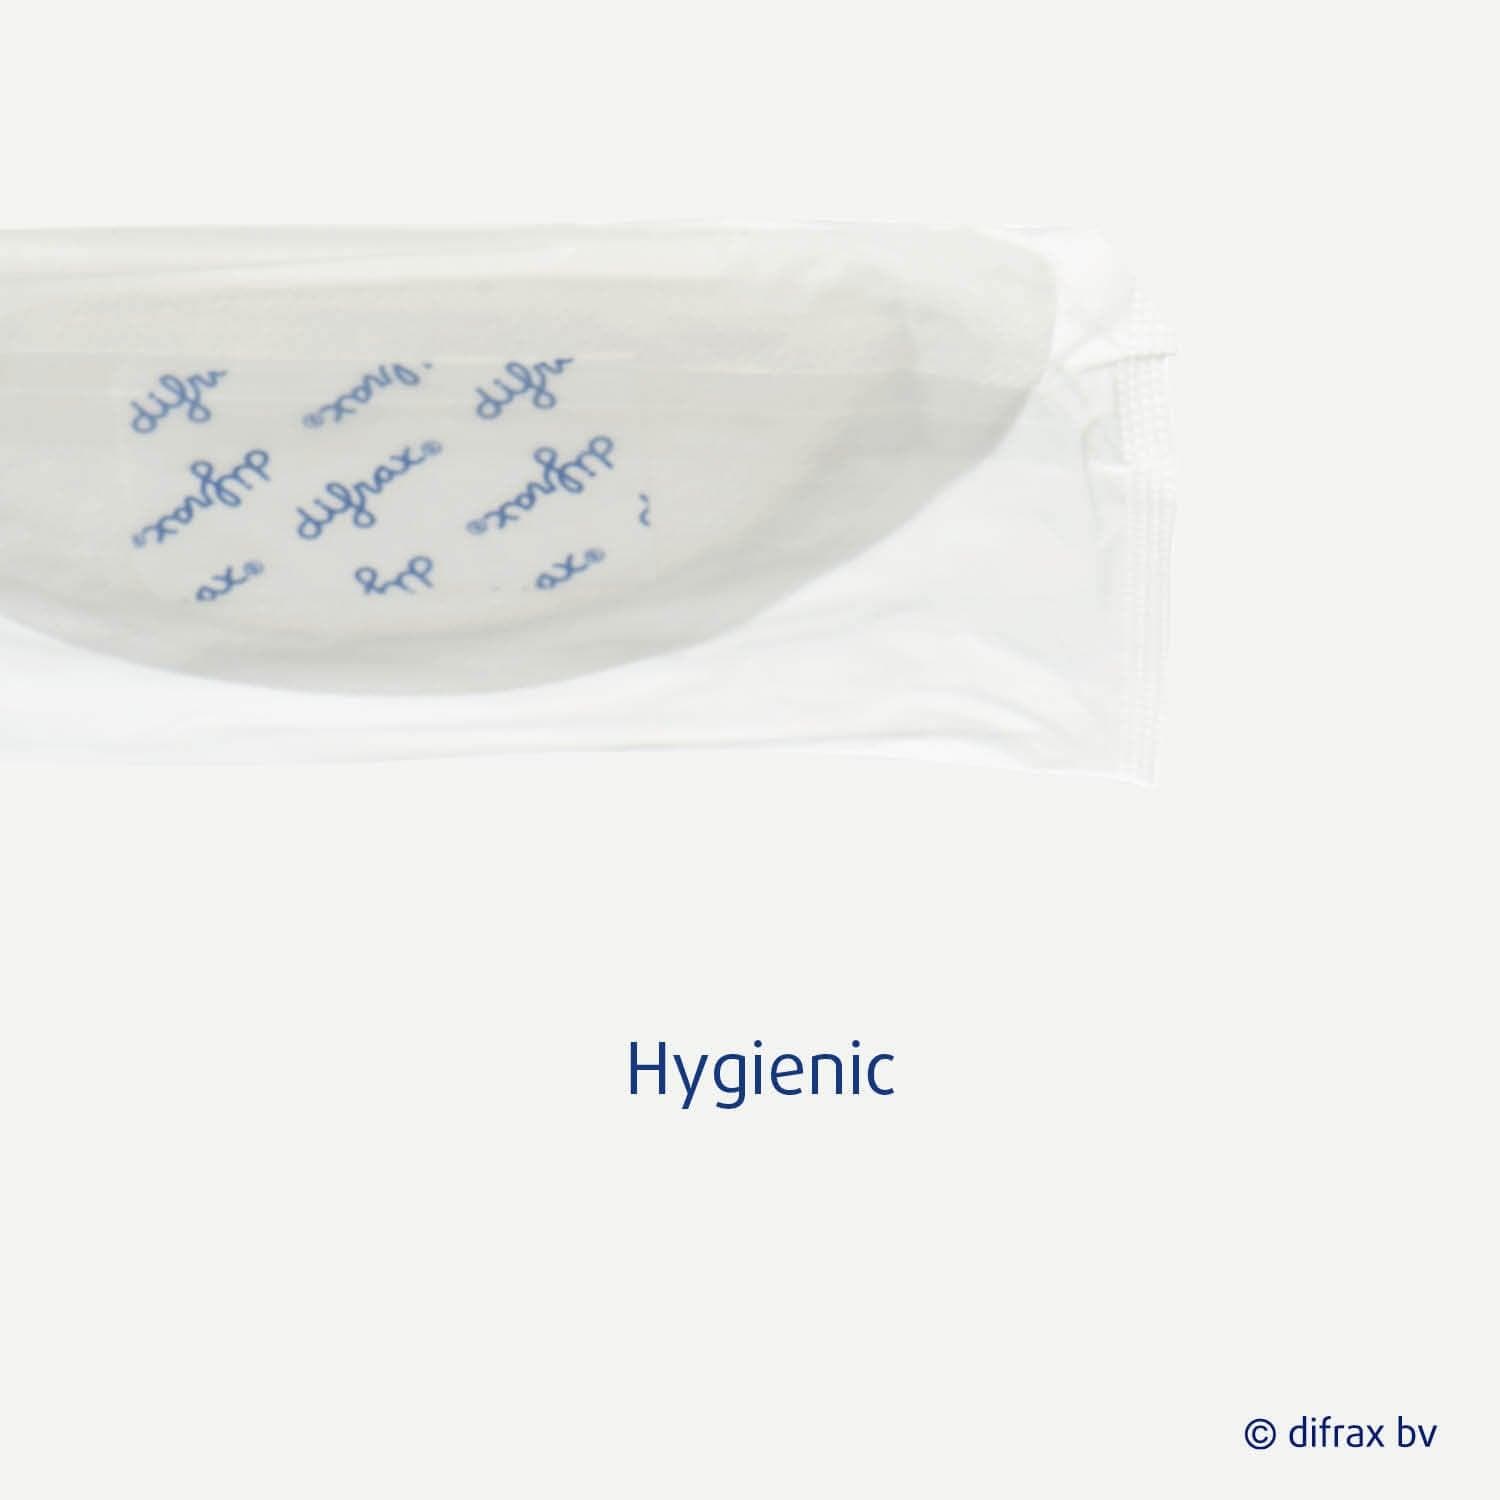 Hygienic nursing pads